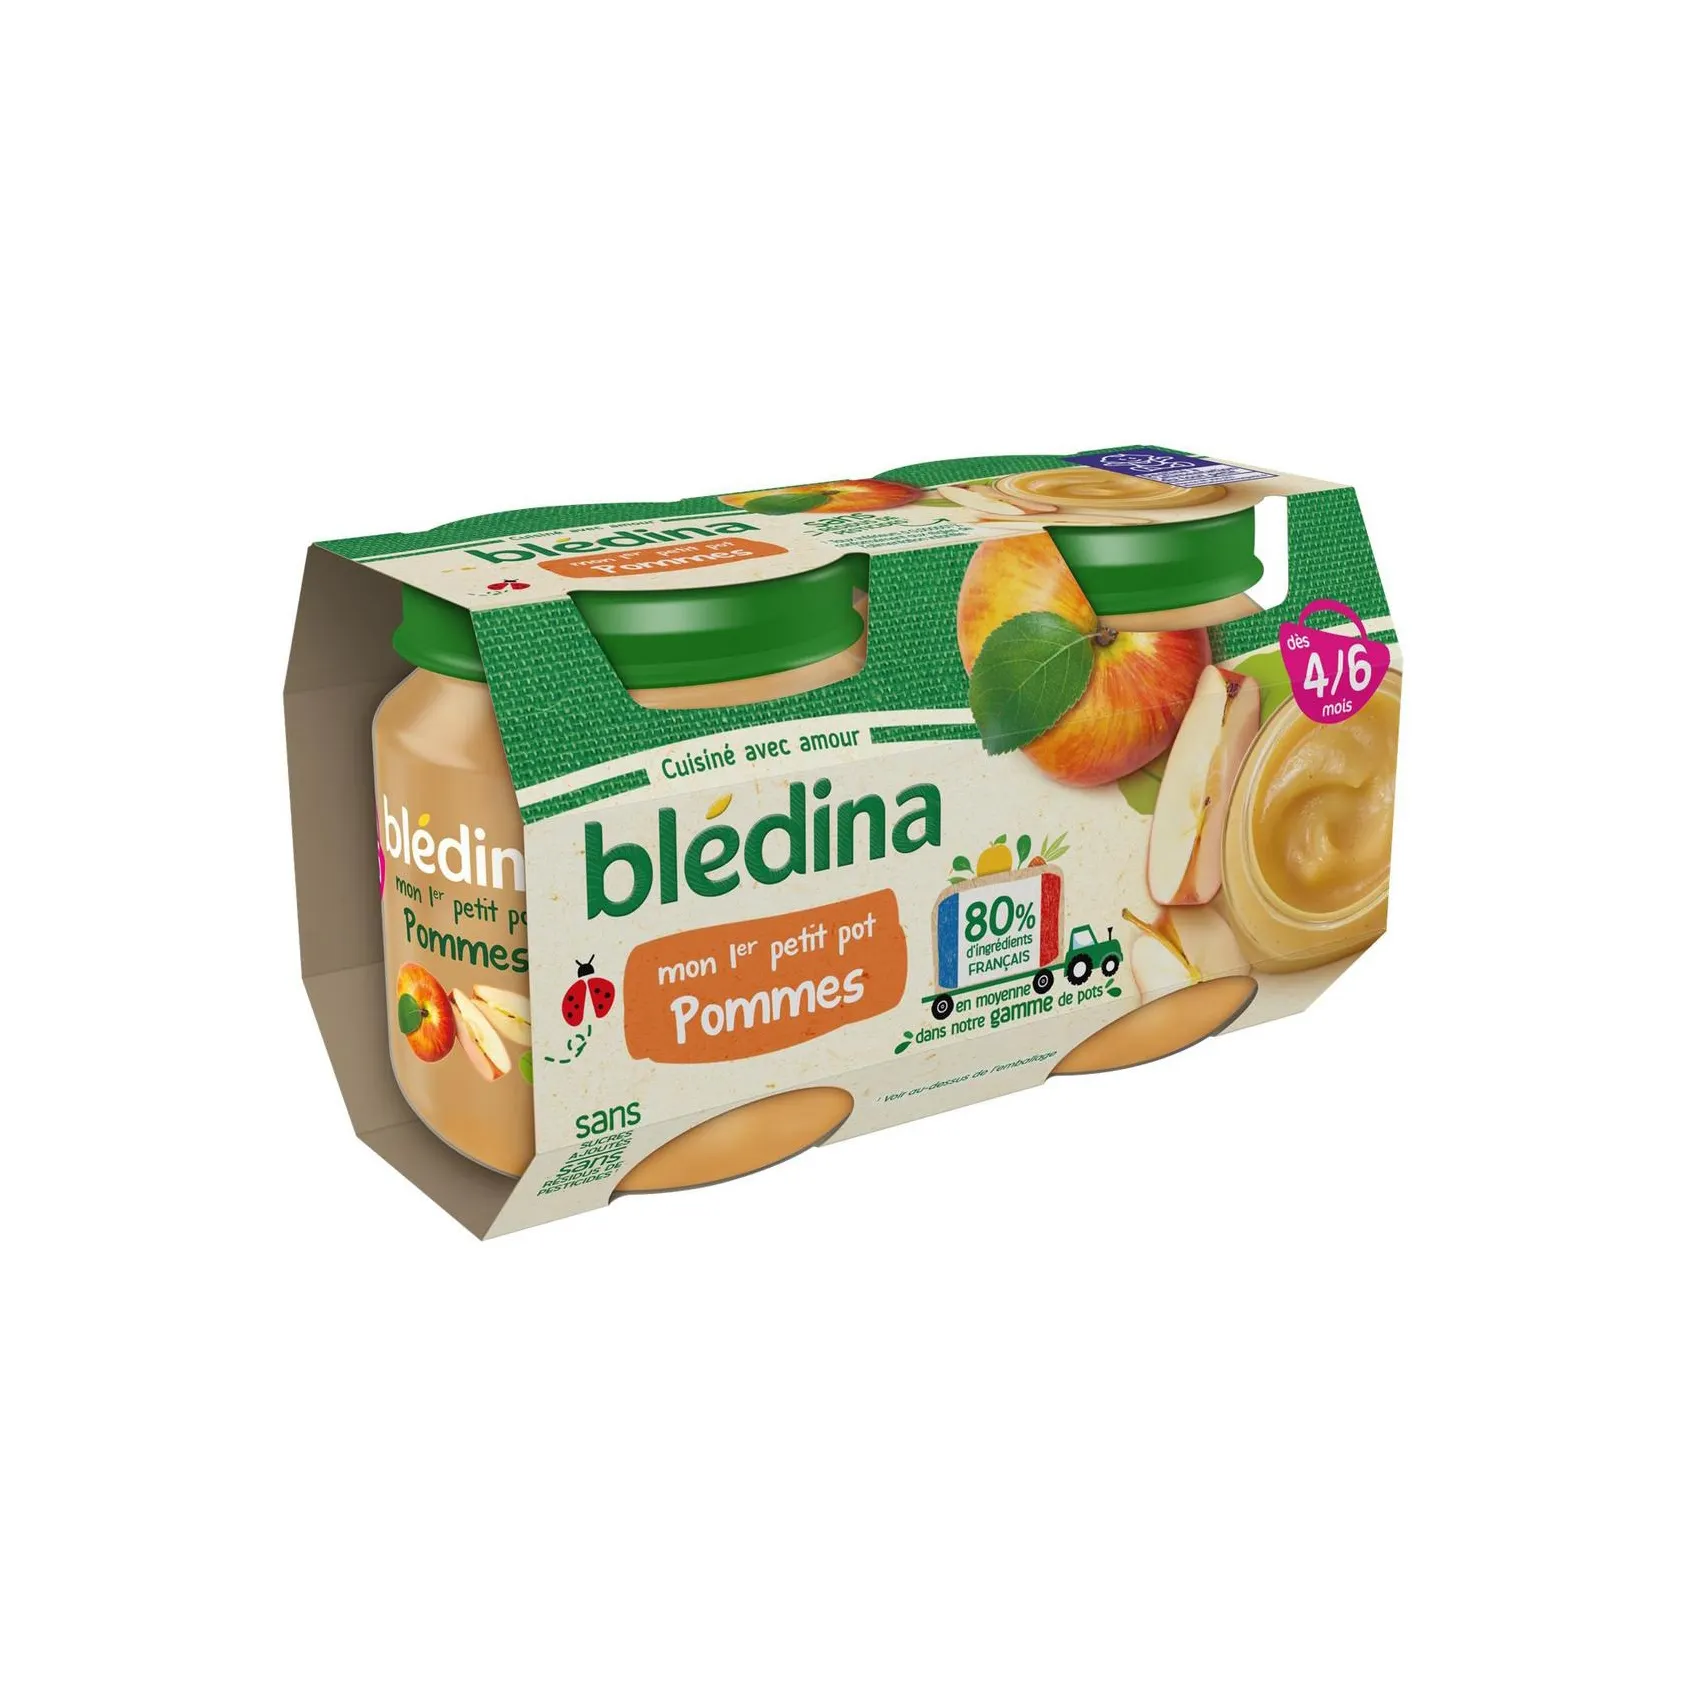 Bledina instant cereals 400g Baby Food Original Quality Bledina Cereals 400g Baby Food